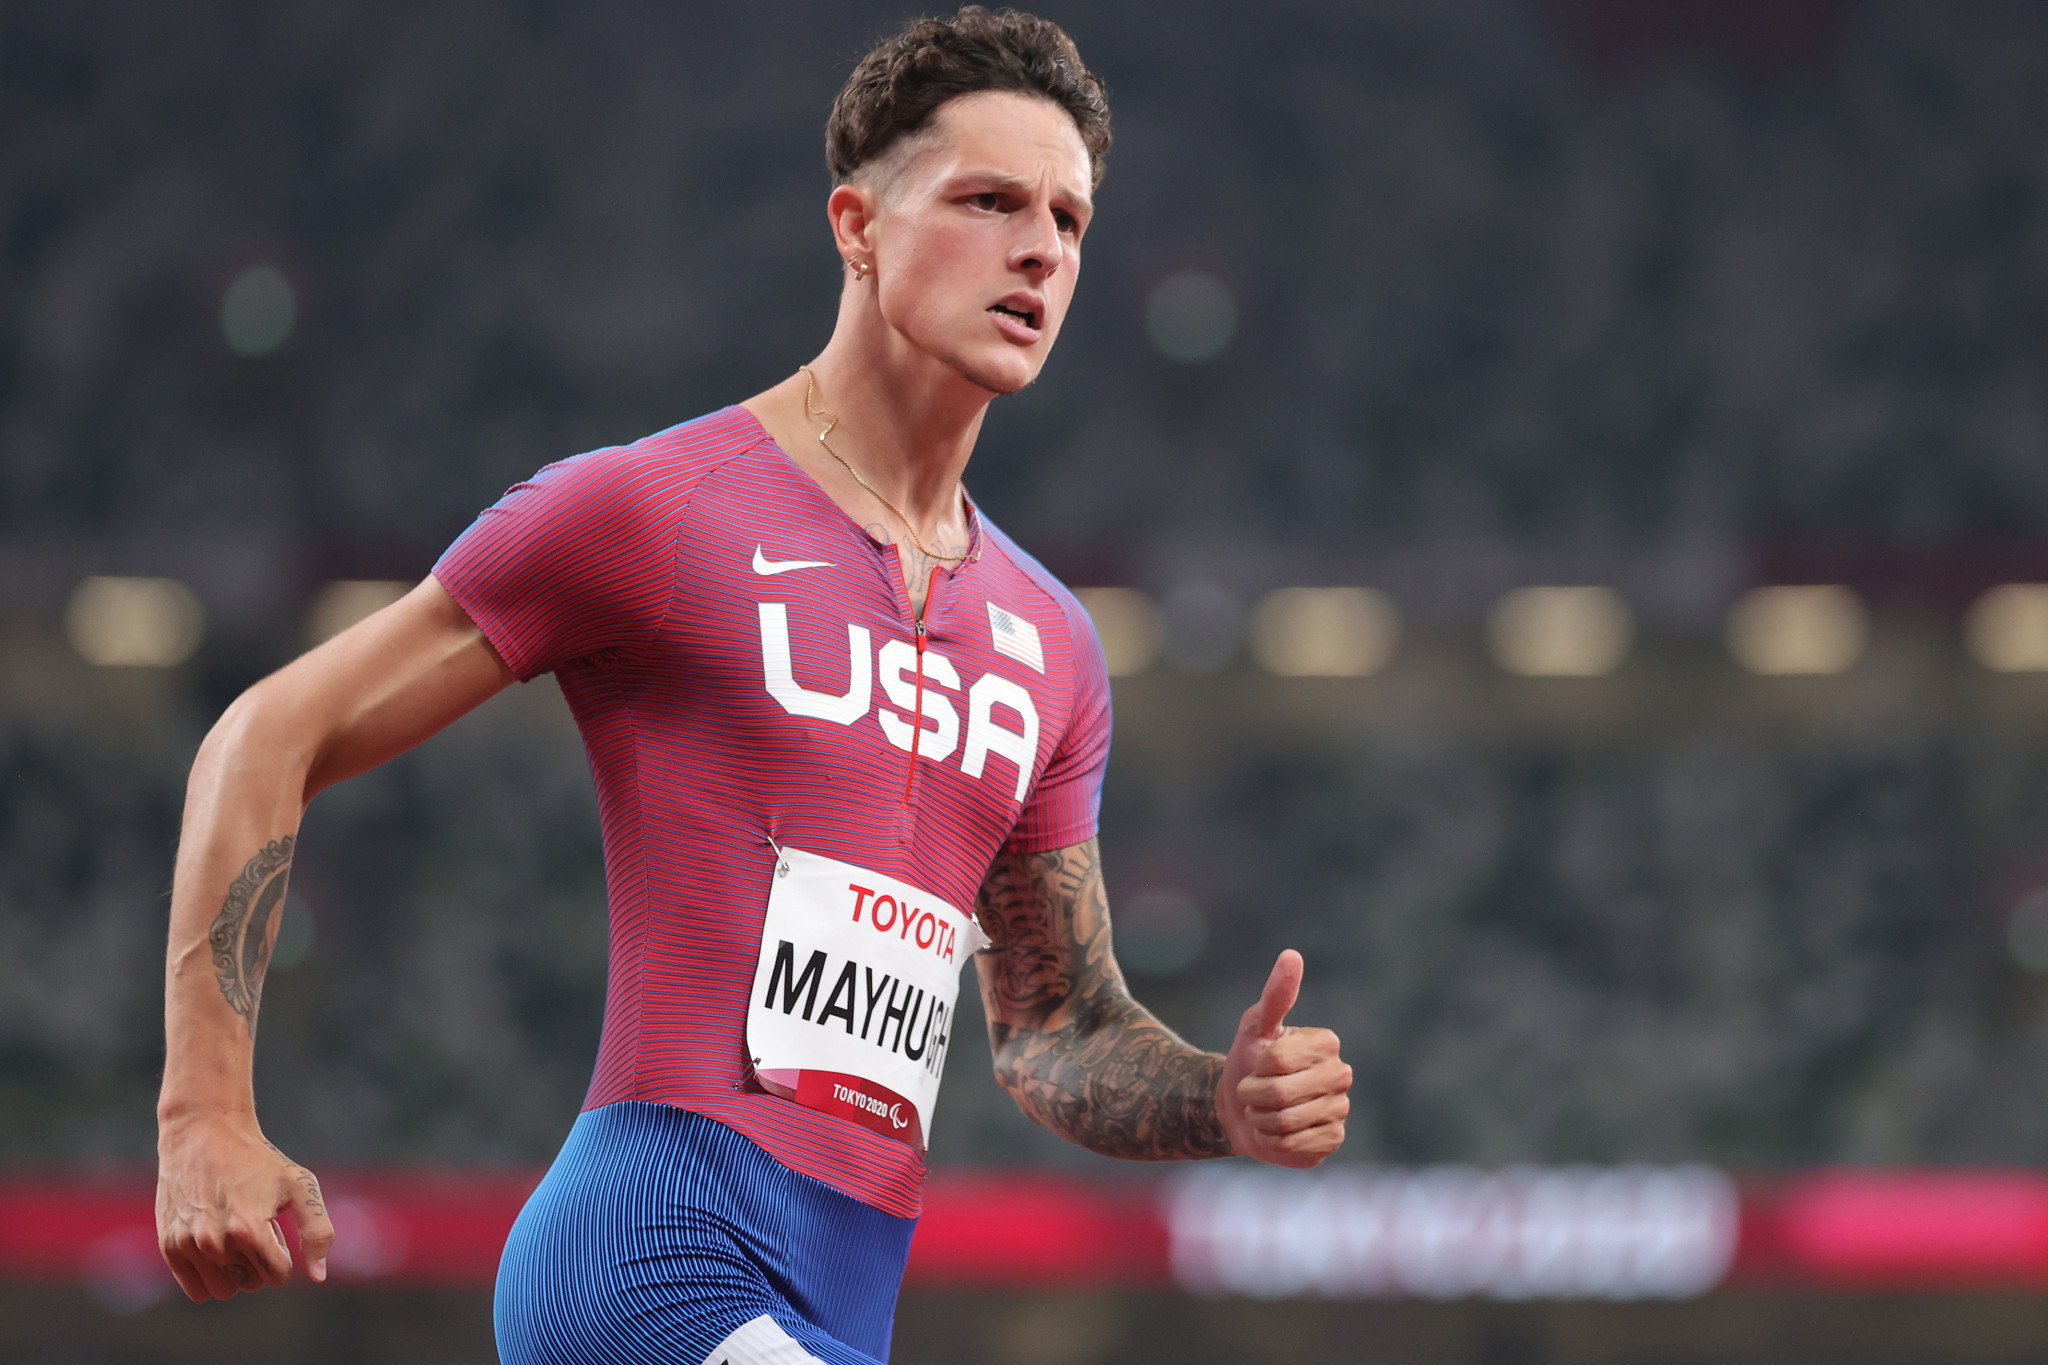 Mayhugh breaks world record twice on Tokyo 2020 Paralympics athletics opening day